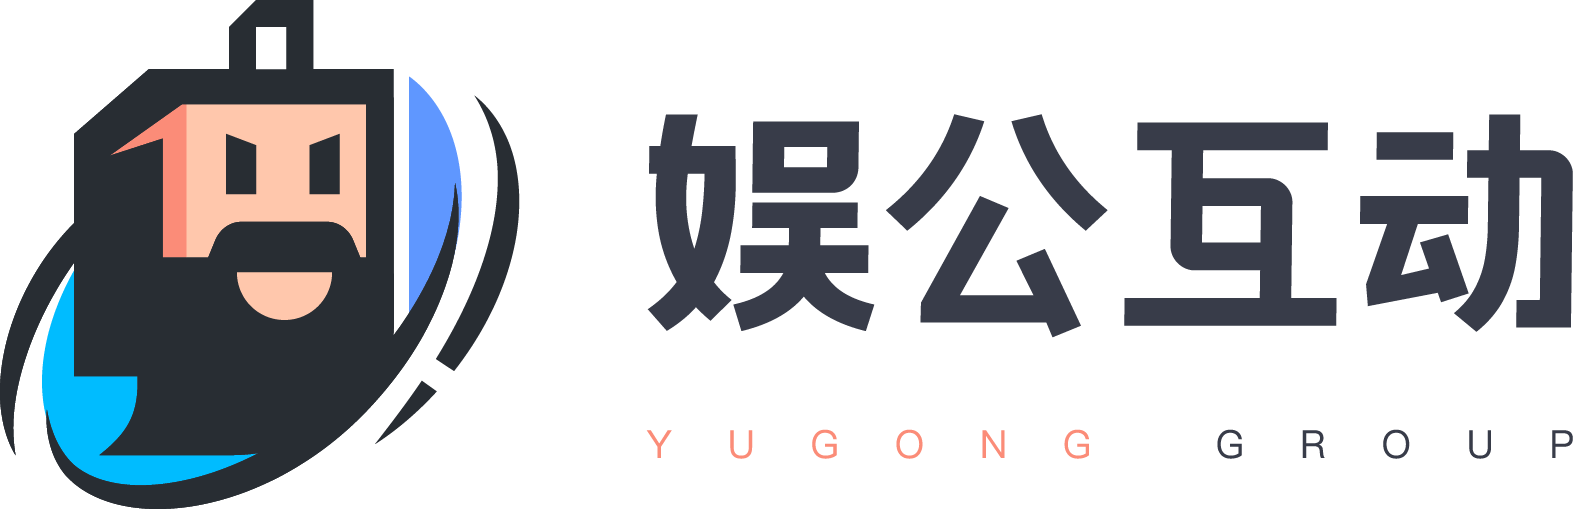 Yugong Group